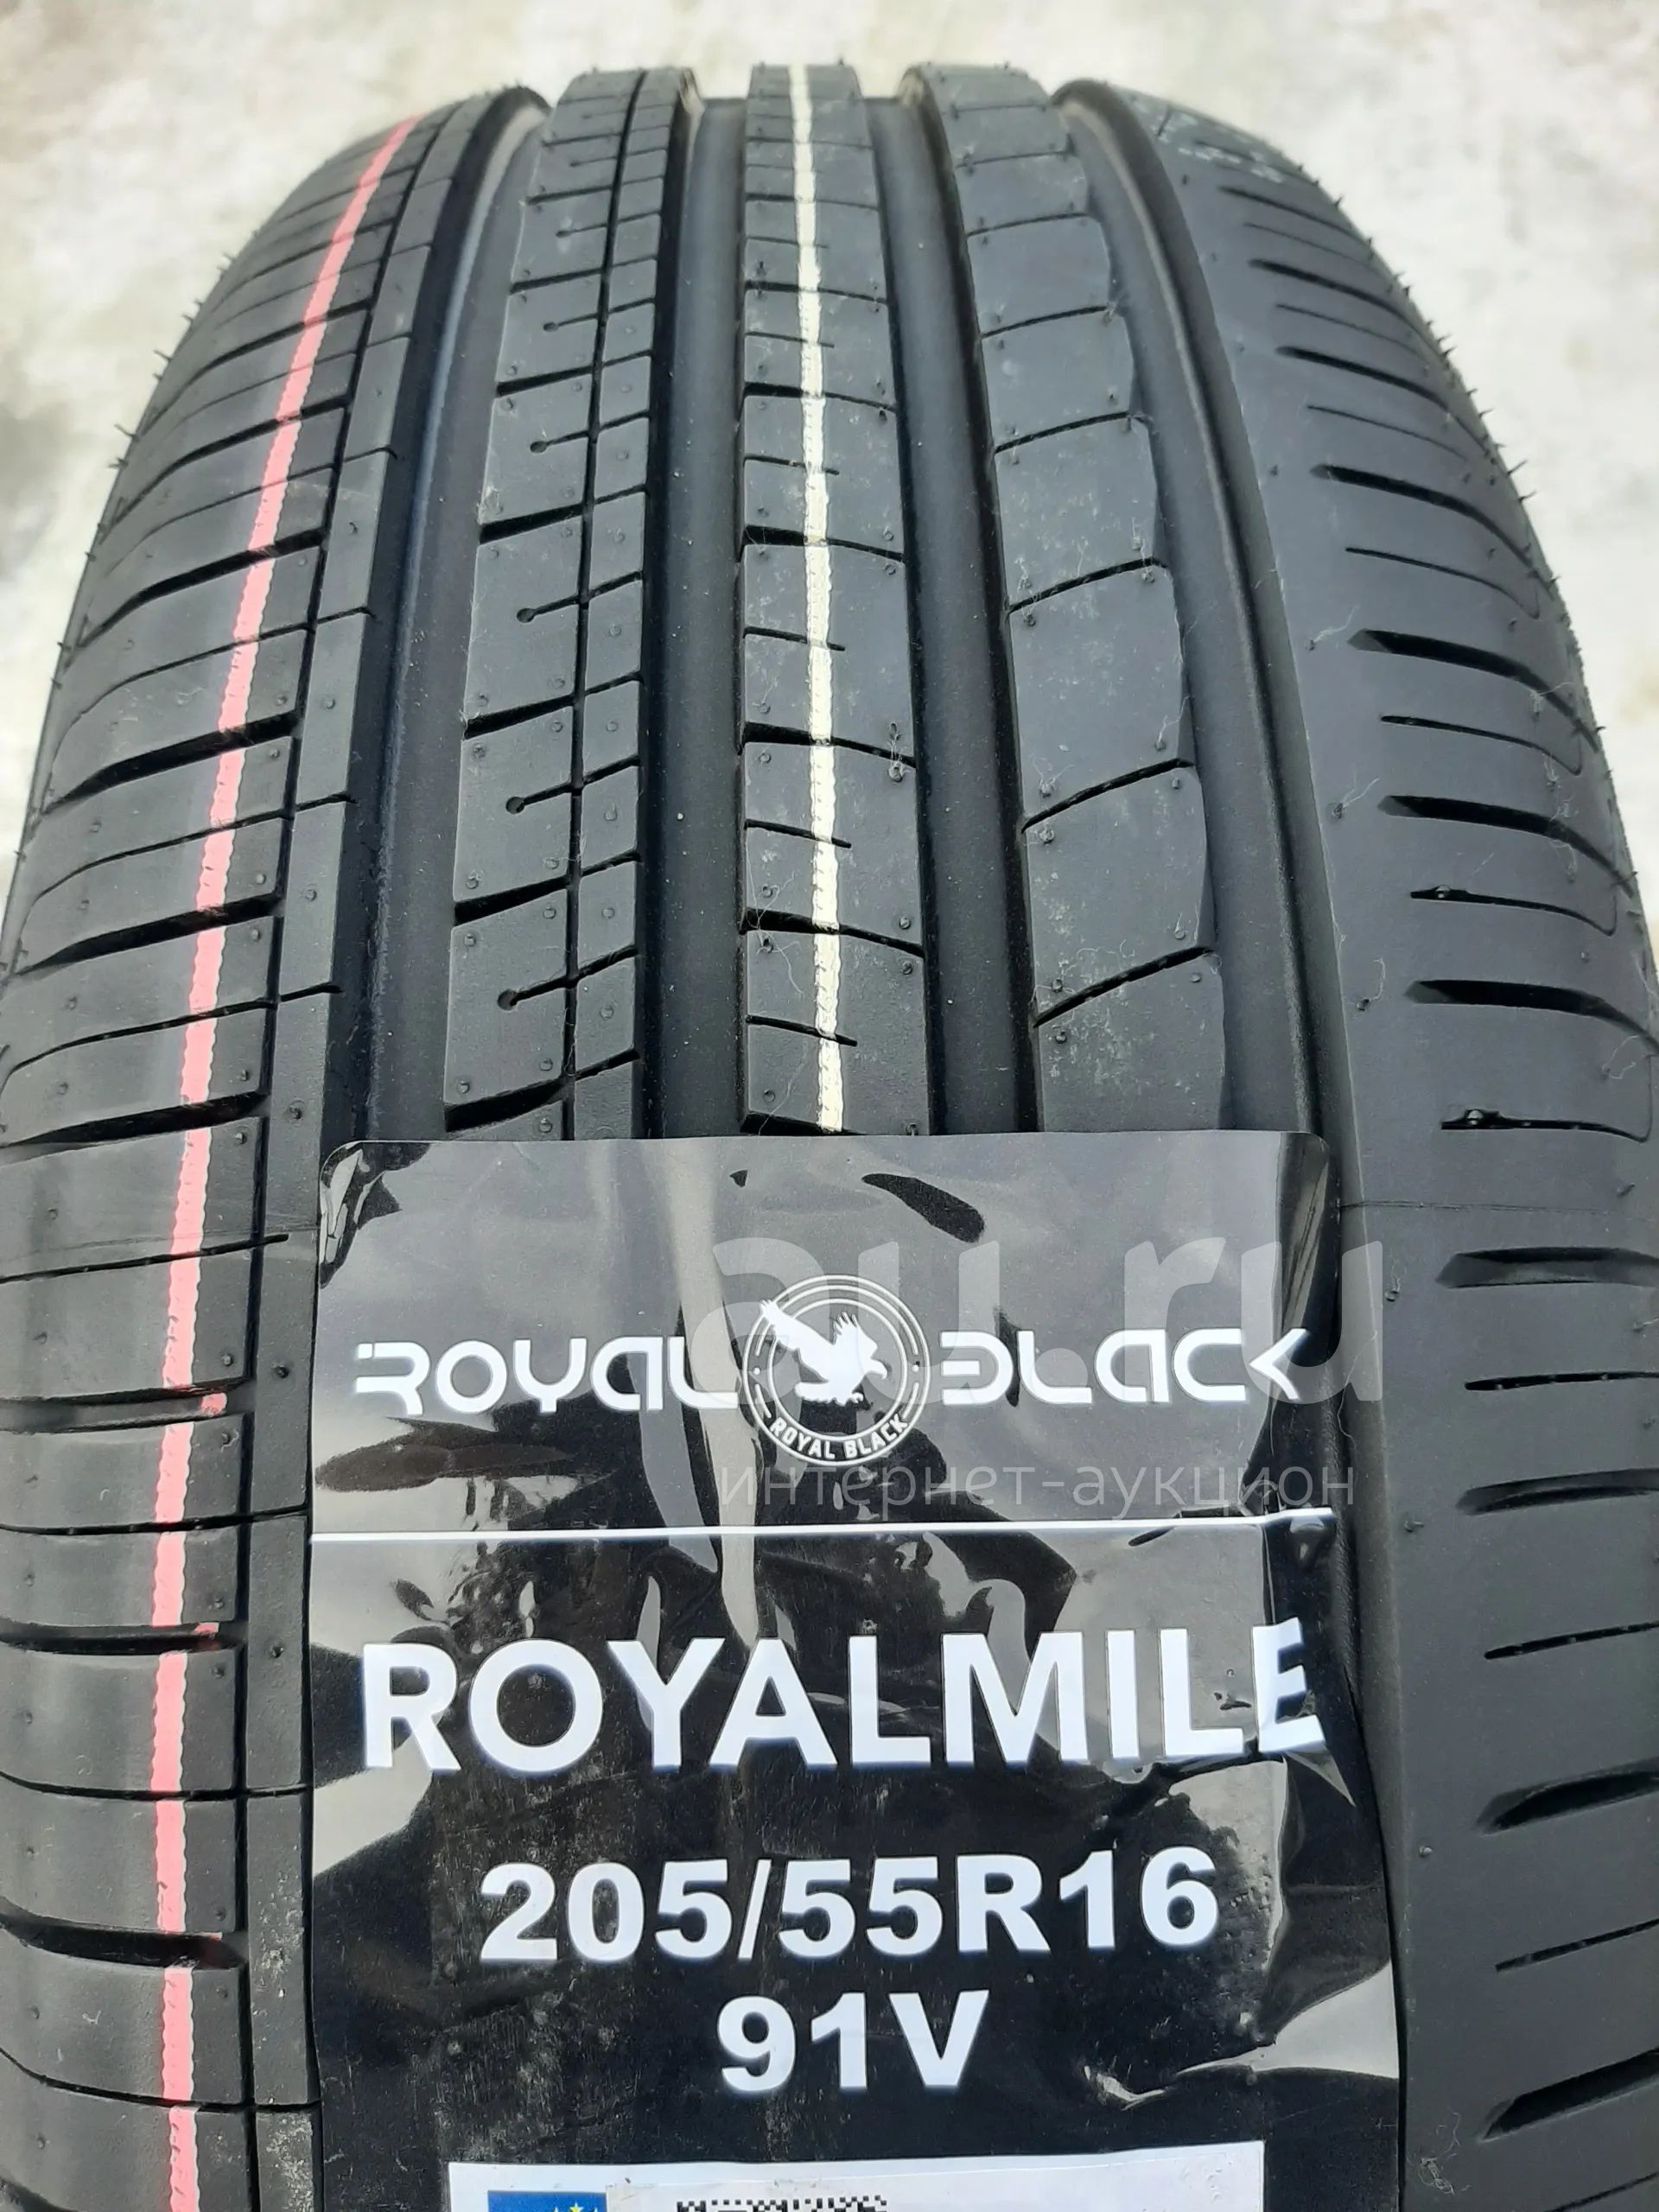 Royal black royal comfort. Шина Royal Black royalmile 205/55 r16 91v. Royal Black Mile 205/55 r16. "Royal Black Mile фото. 215/55r16 Royal Black Royal Comfort 93h.